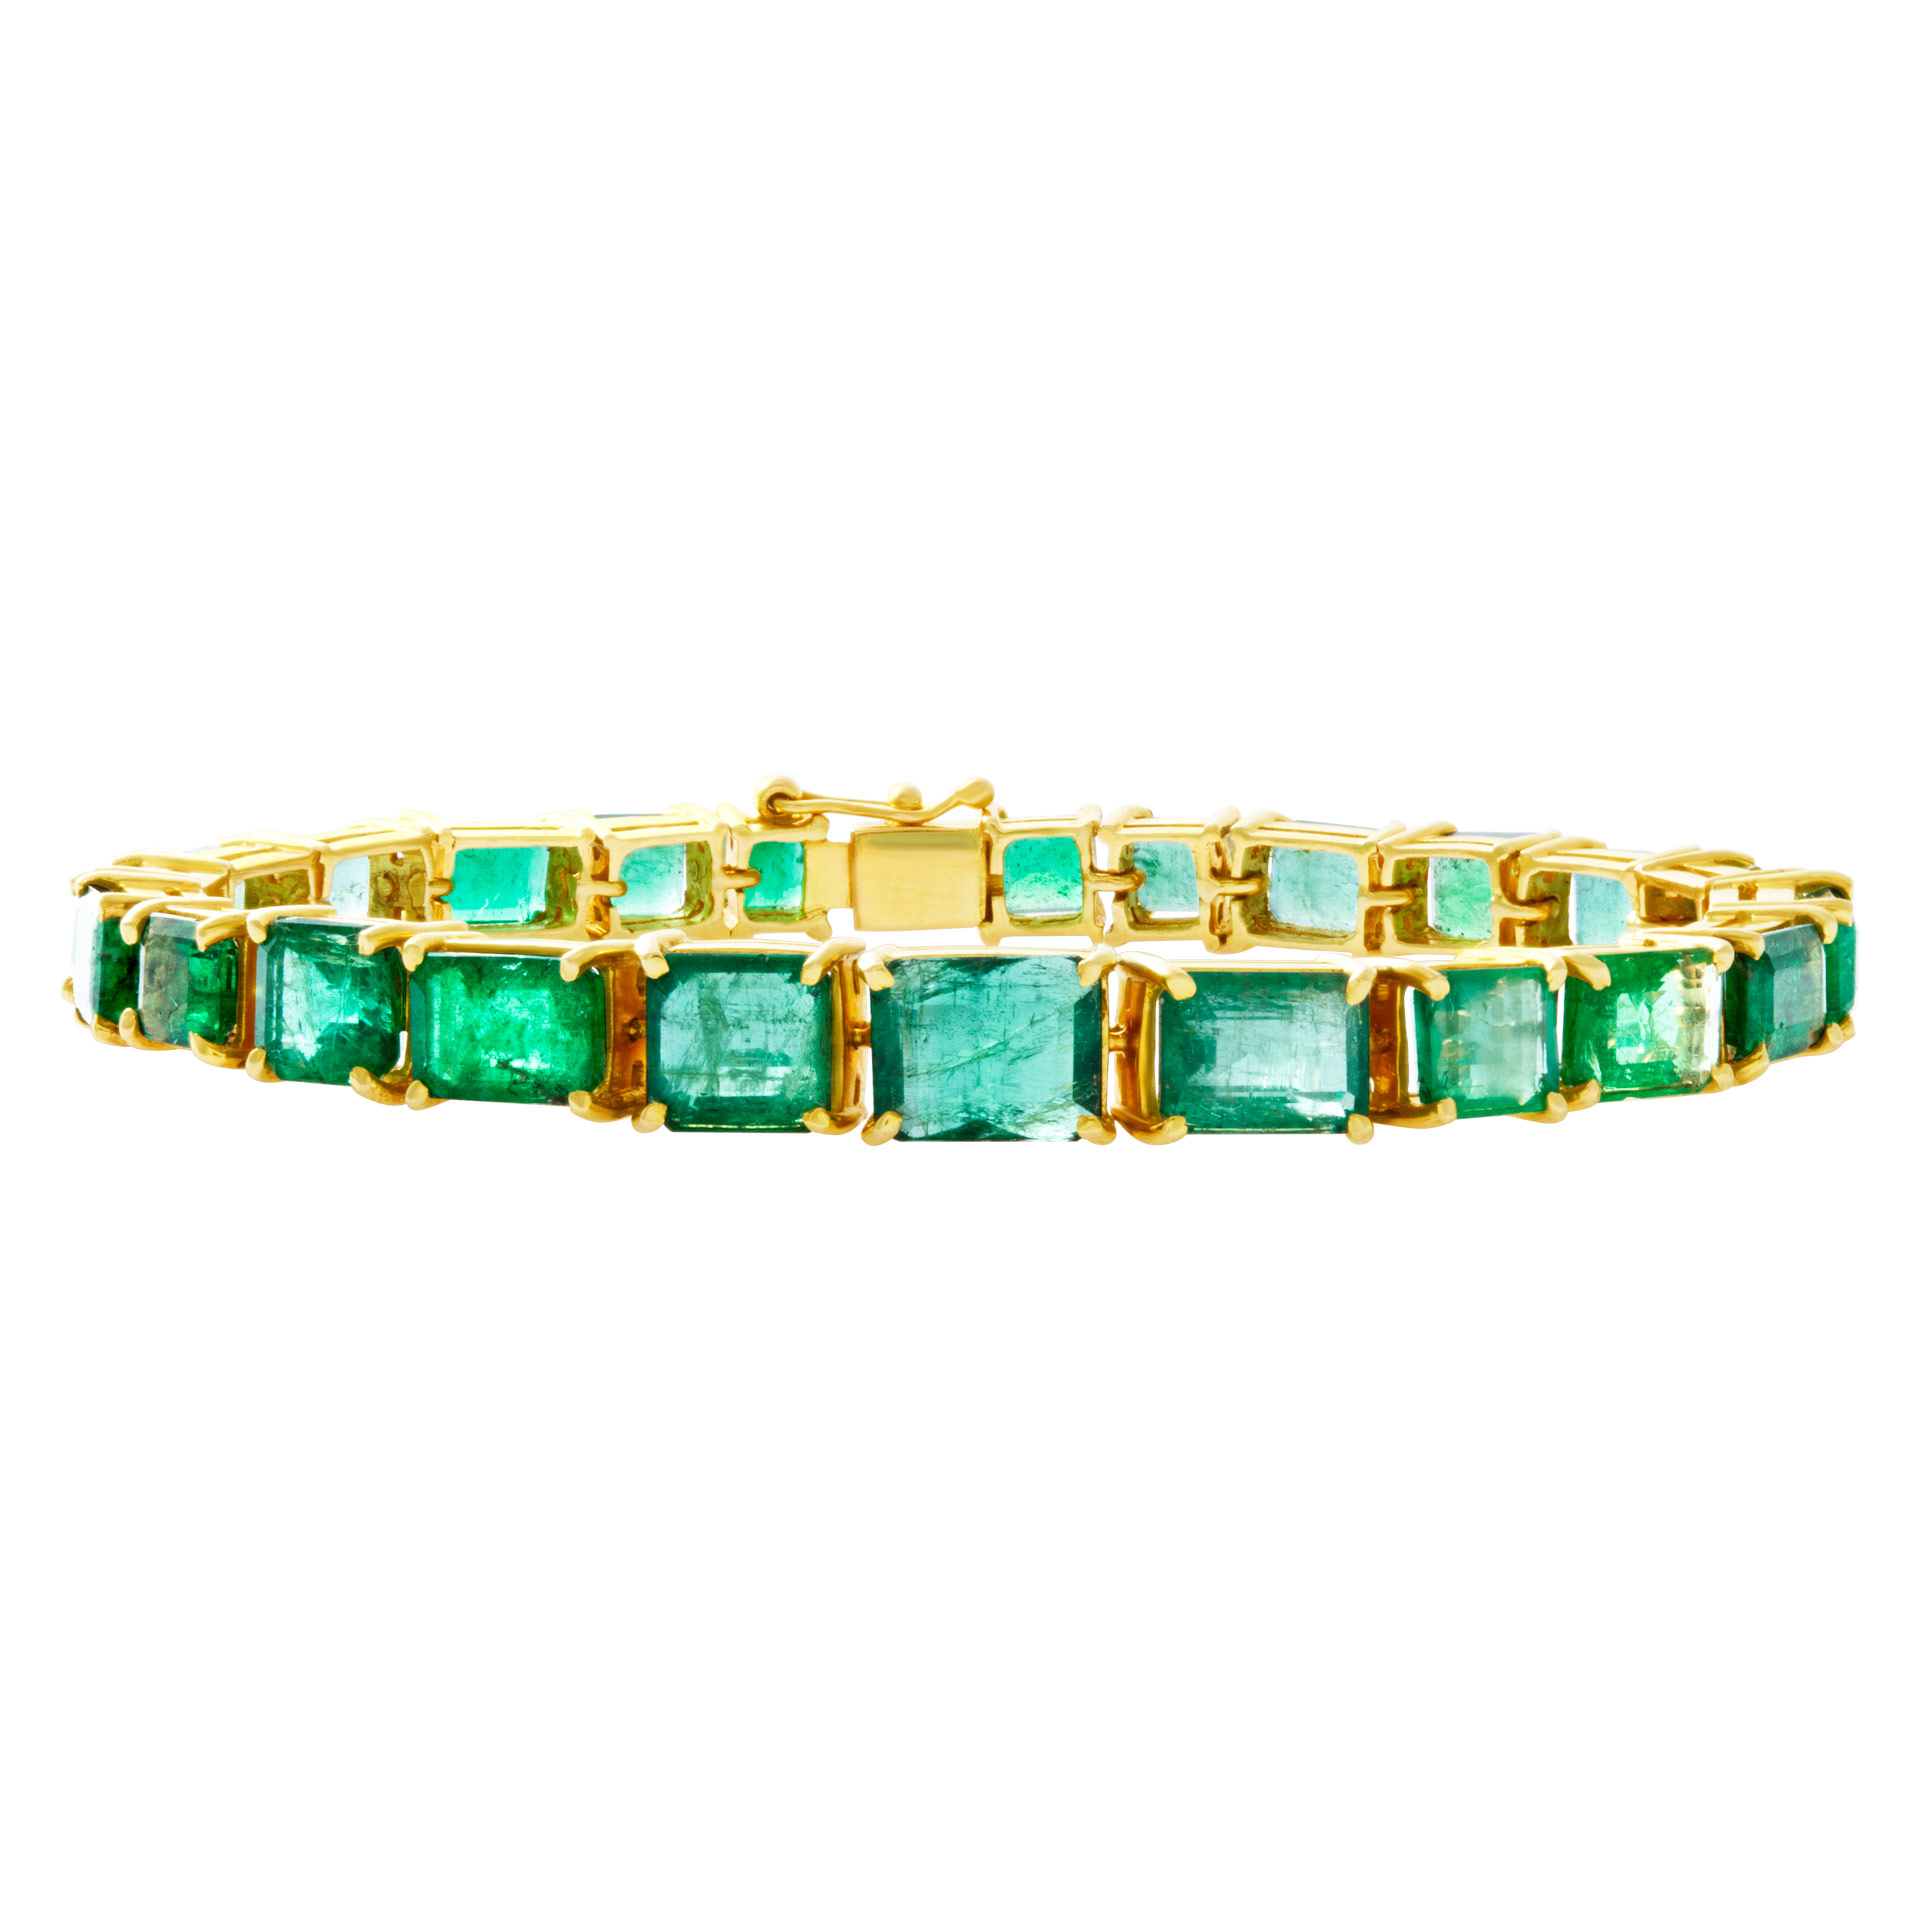 Emerald line bracelet in 14k